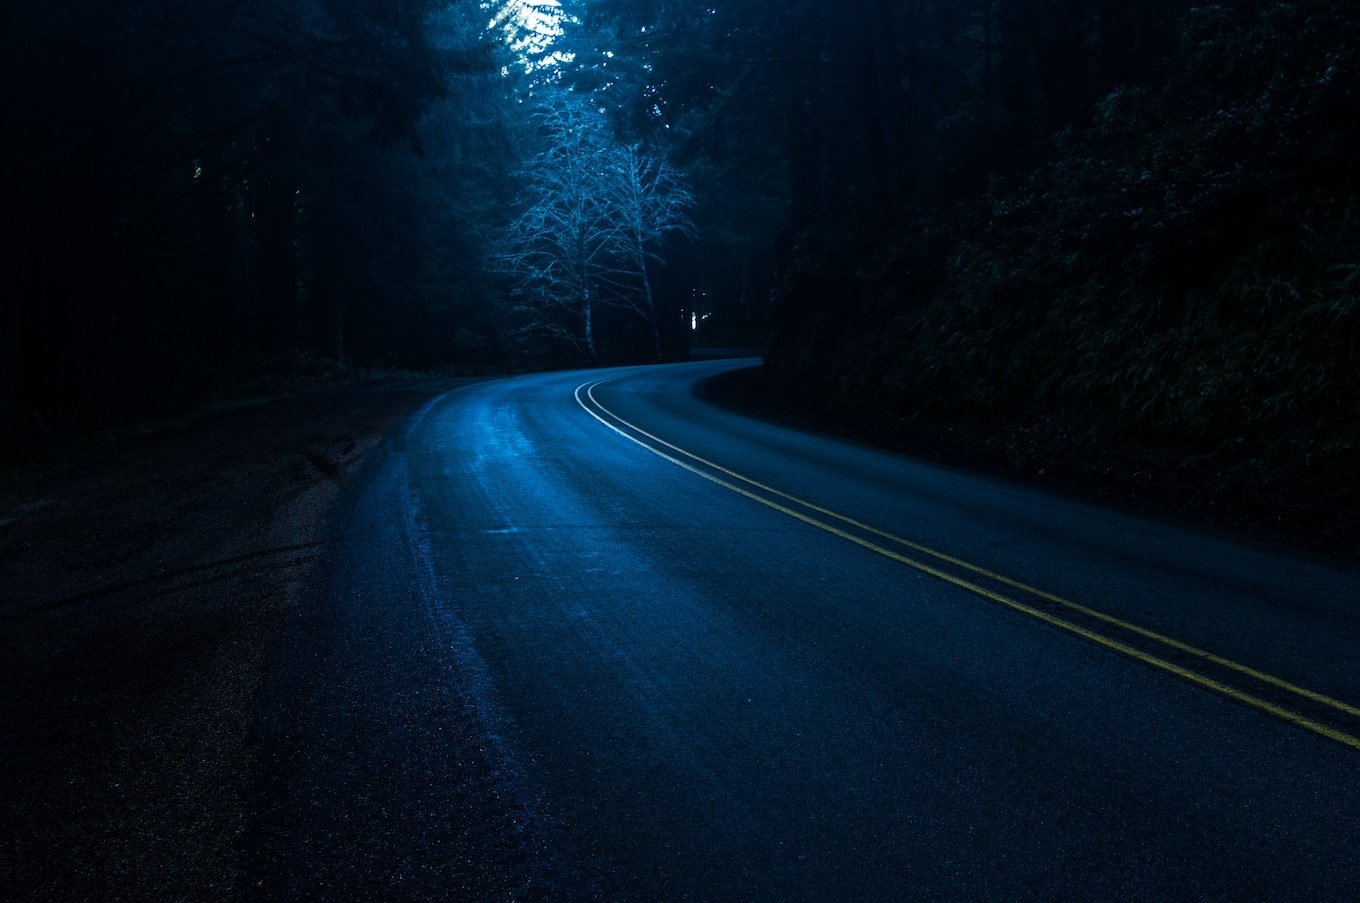 Main night. Темная дорога. Дорога ночью. Лесная дорога ночью. Ночная трасса в лесу.